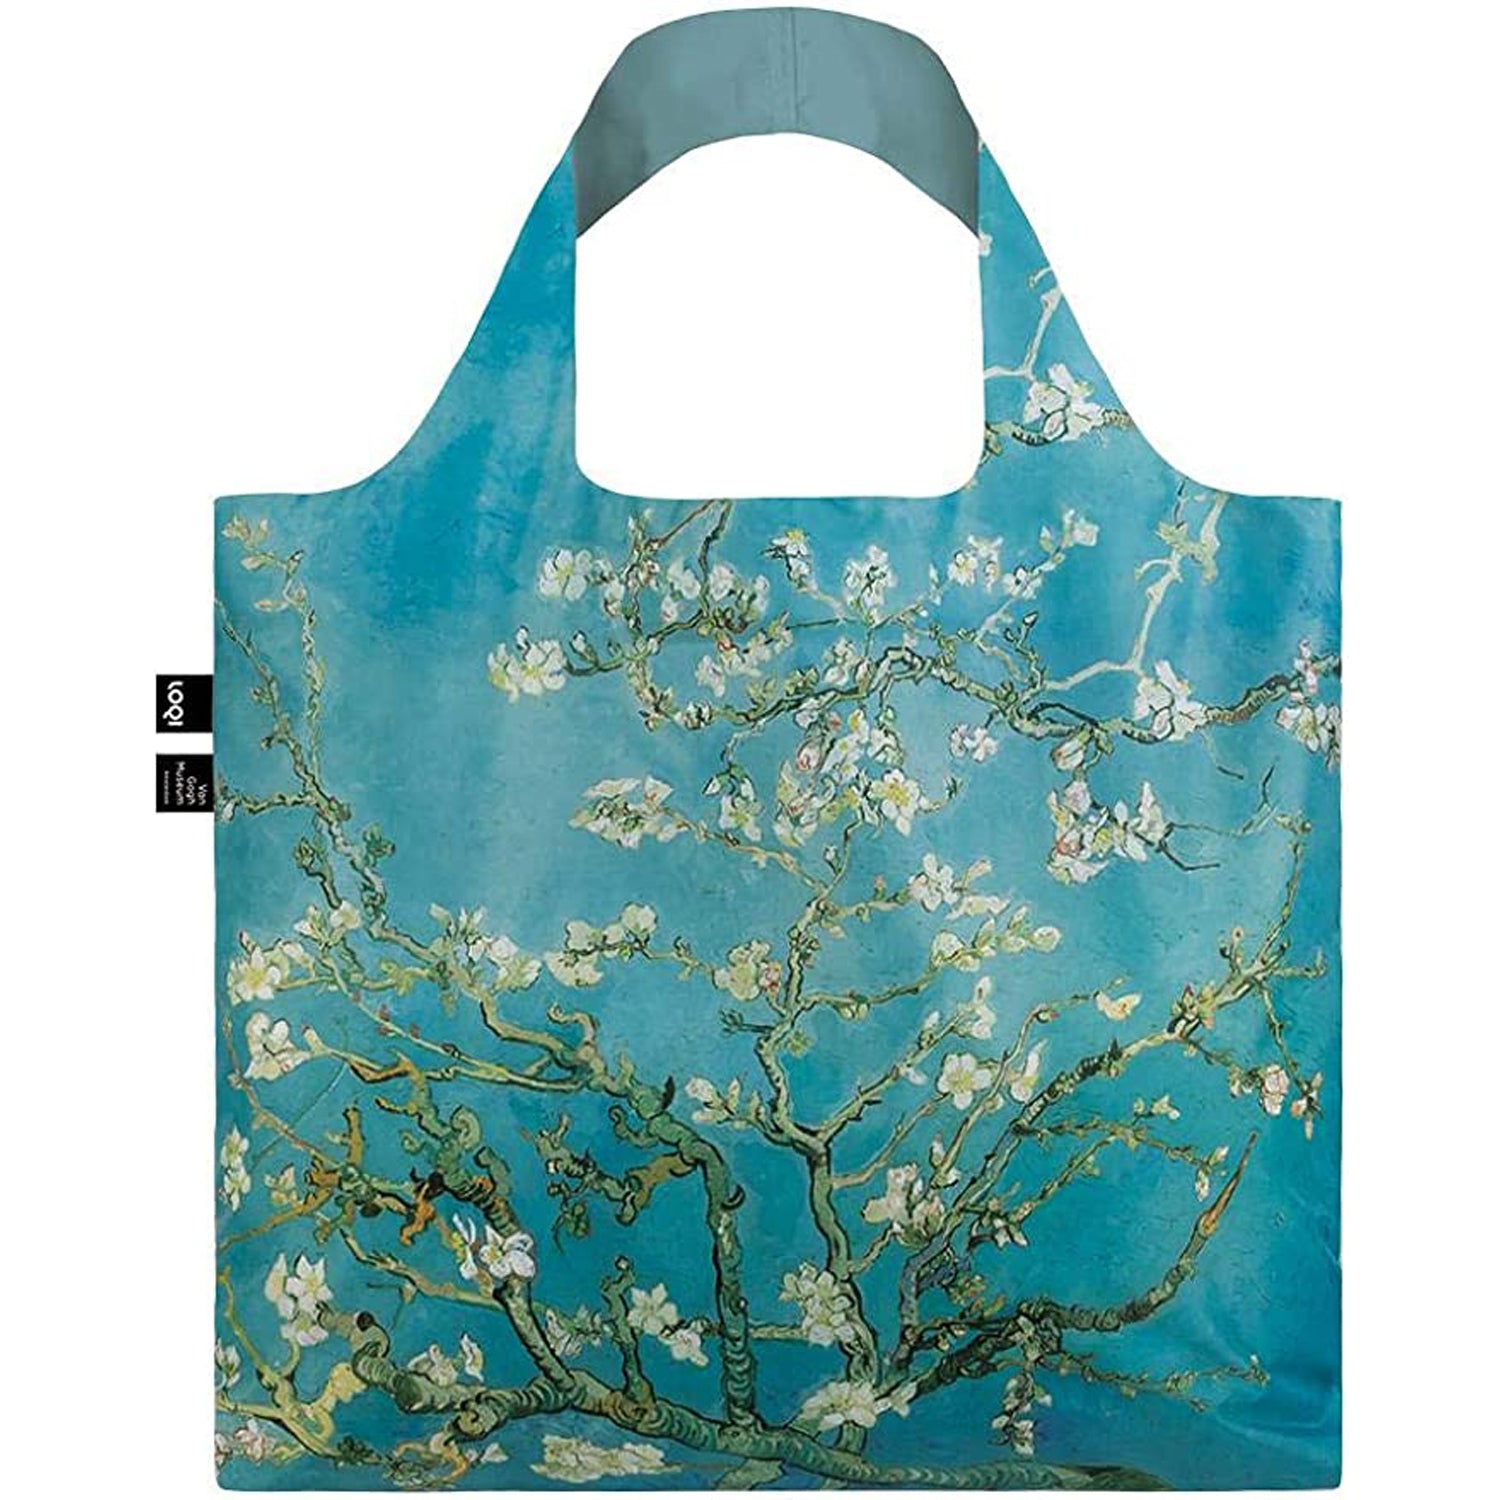 LOQI bag "Almond Blossom"